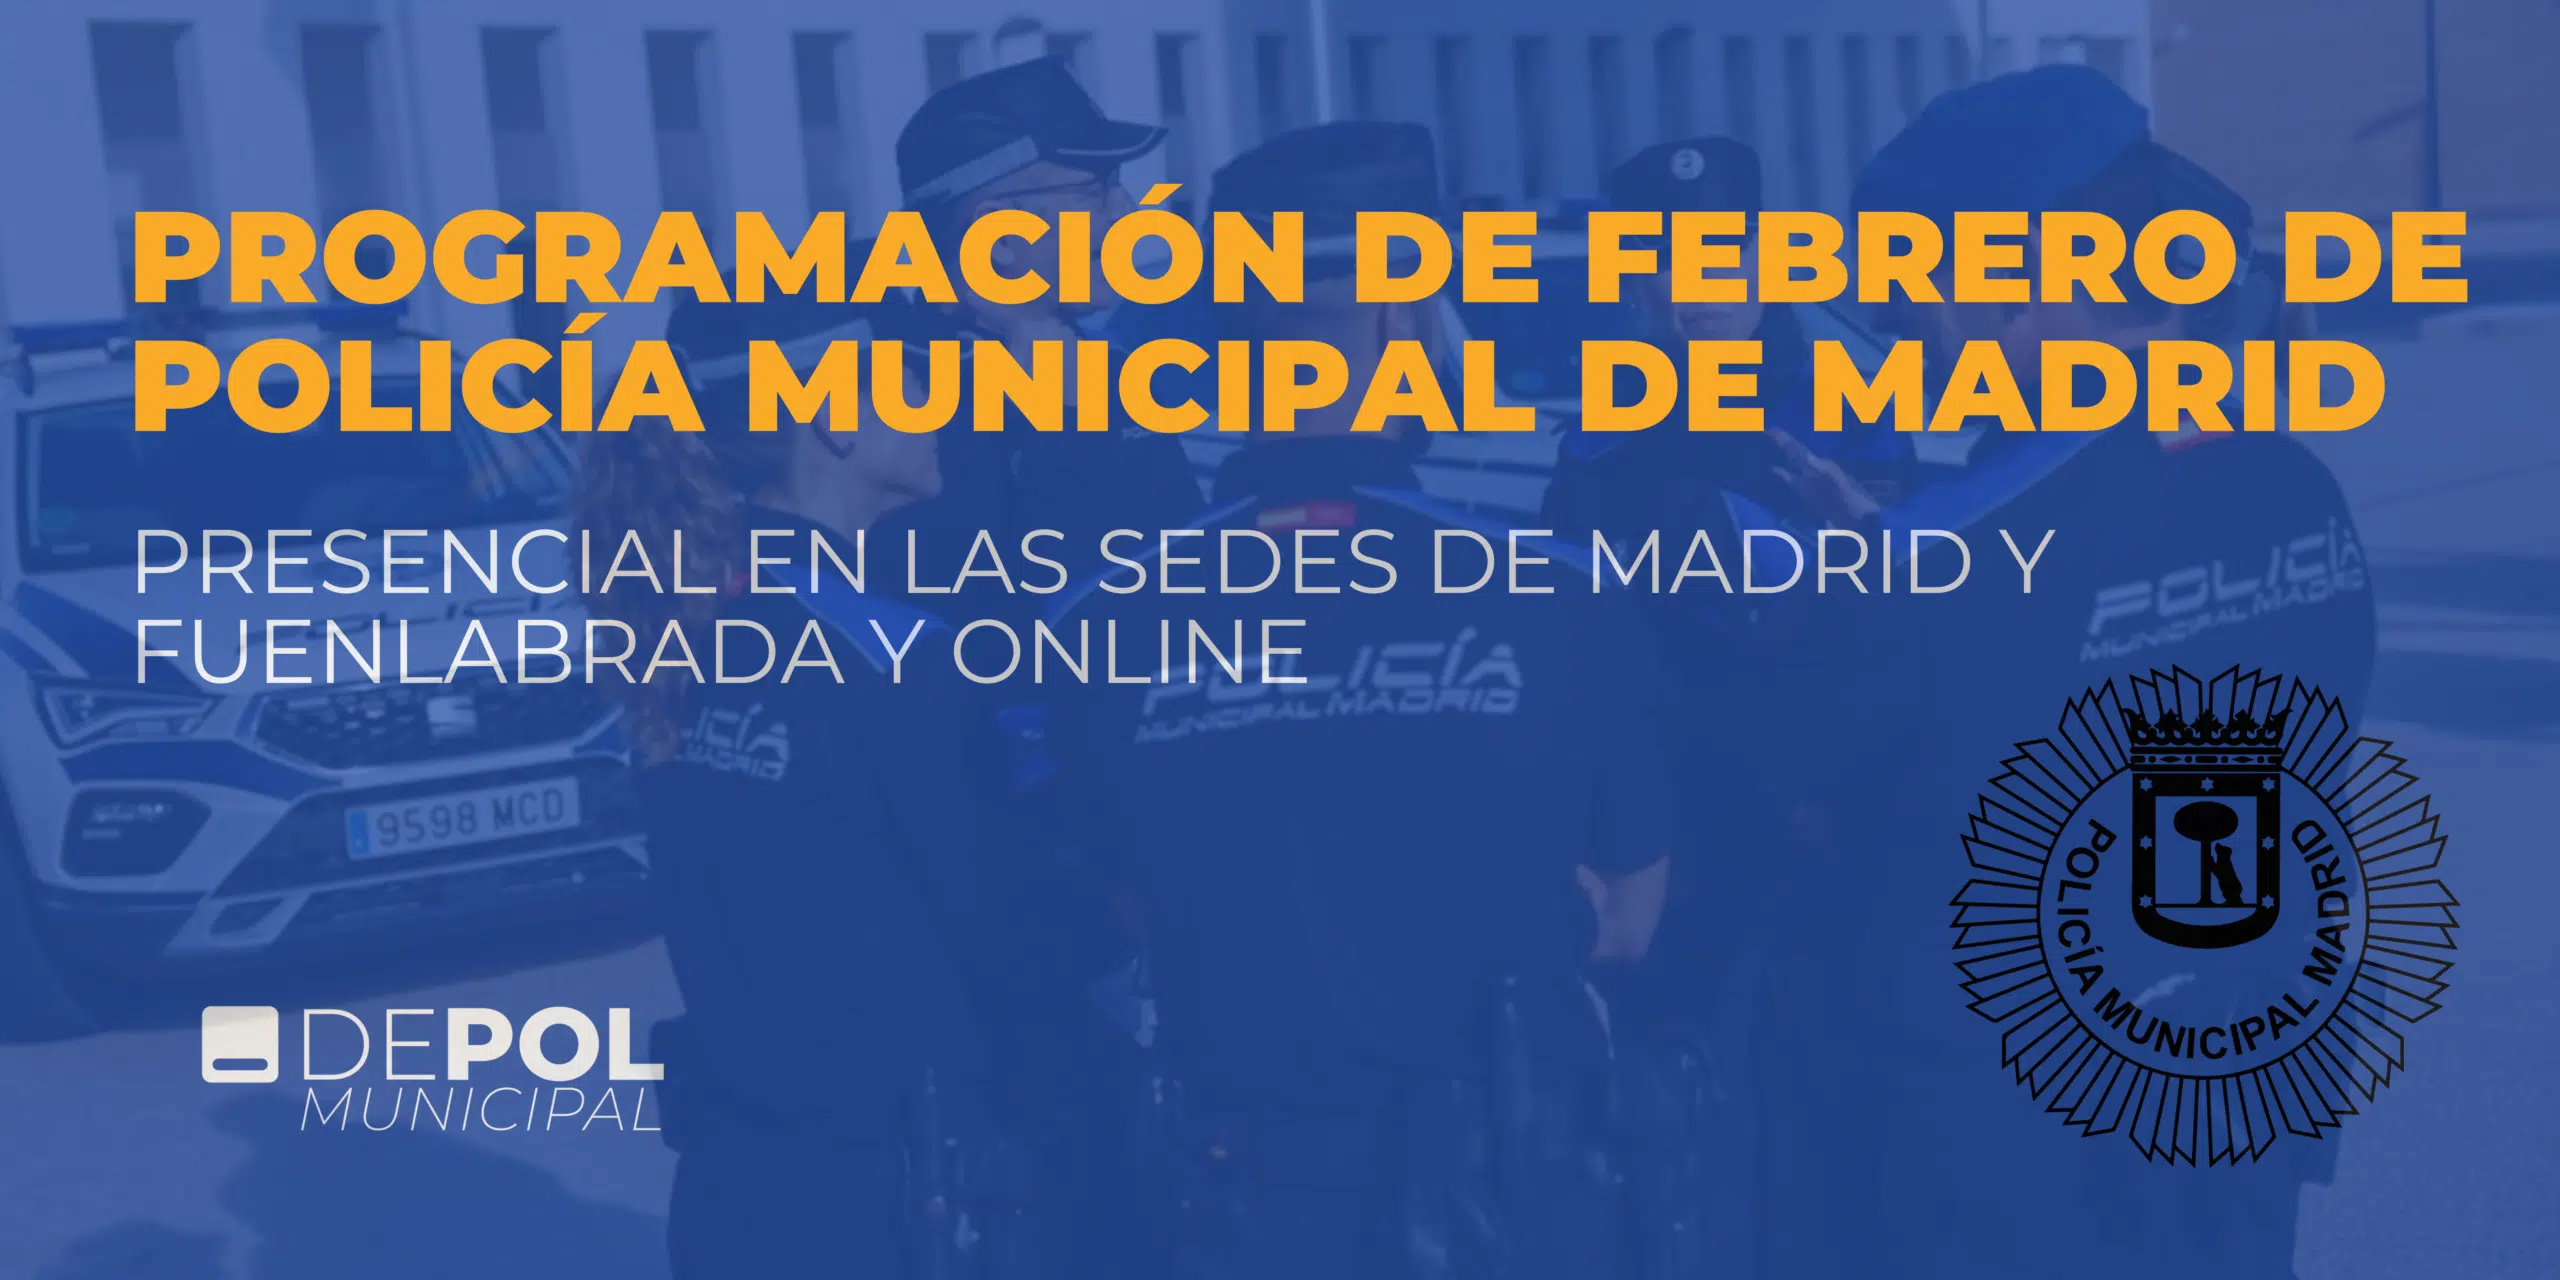 Programación de febrero para Policía Municipal de Madrid